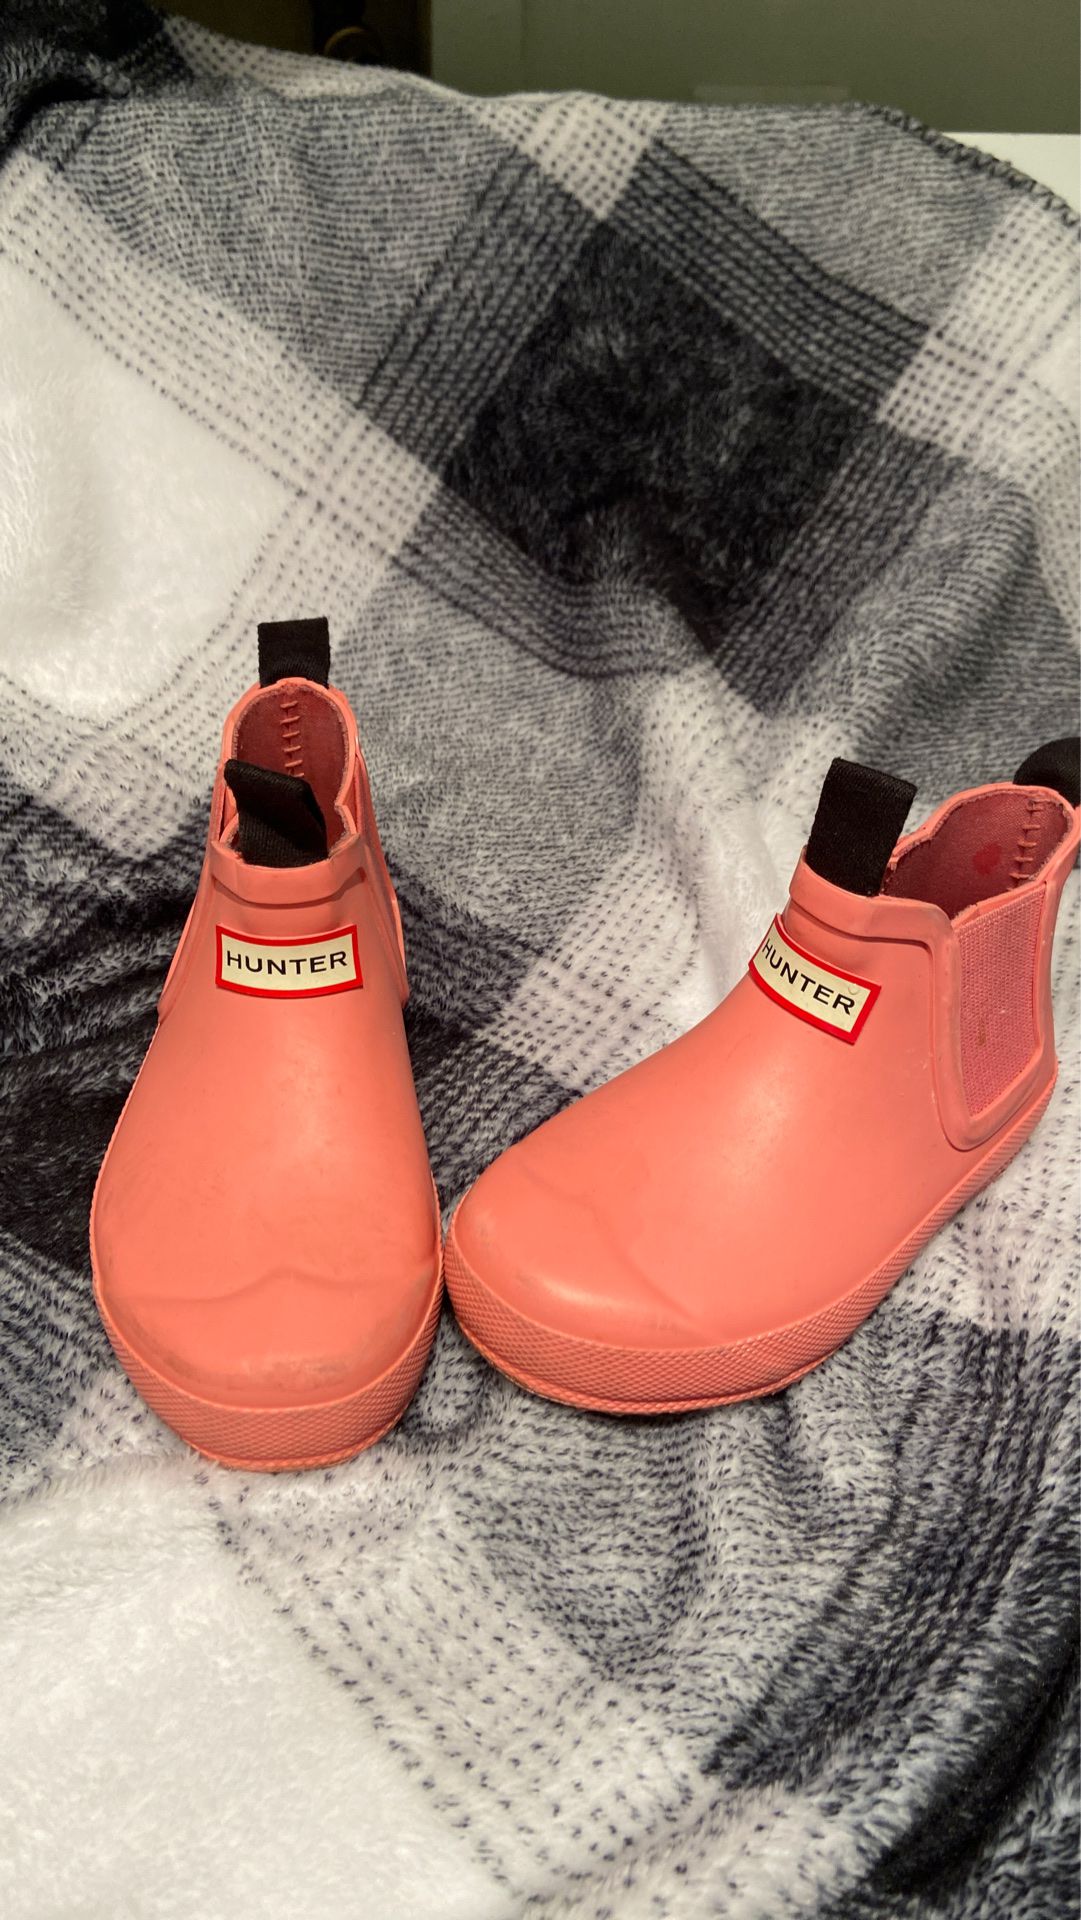 Hunter rain boots size 8 for girls